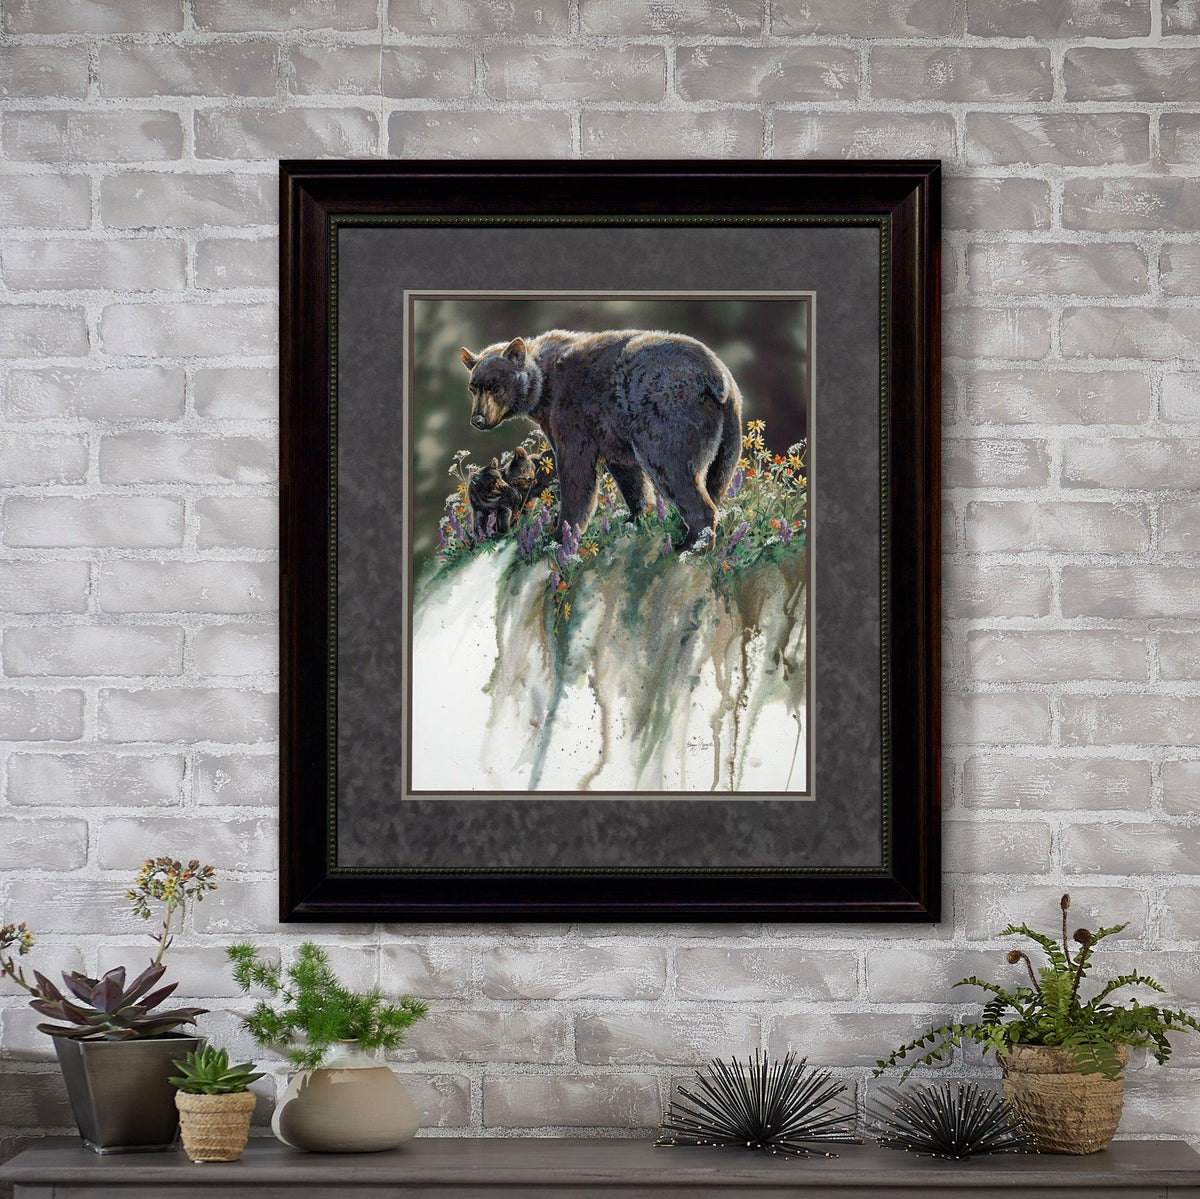 Abundance-Black Bear Original Gouache Painting - Wild Wings